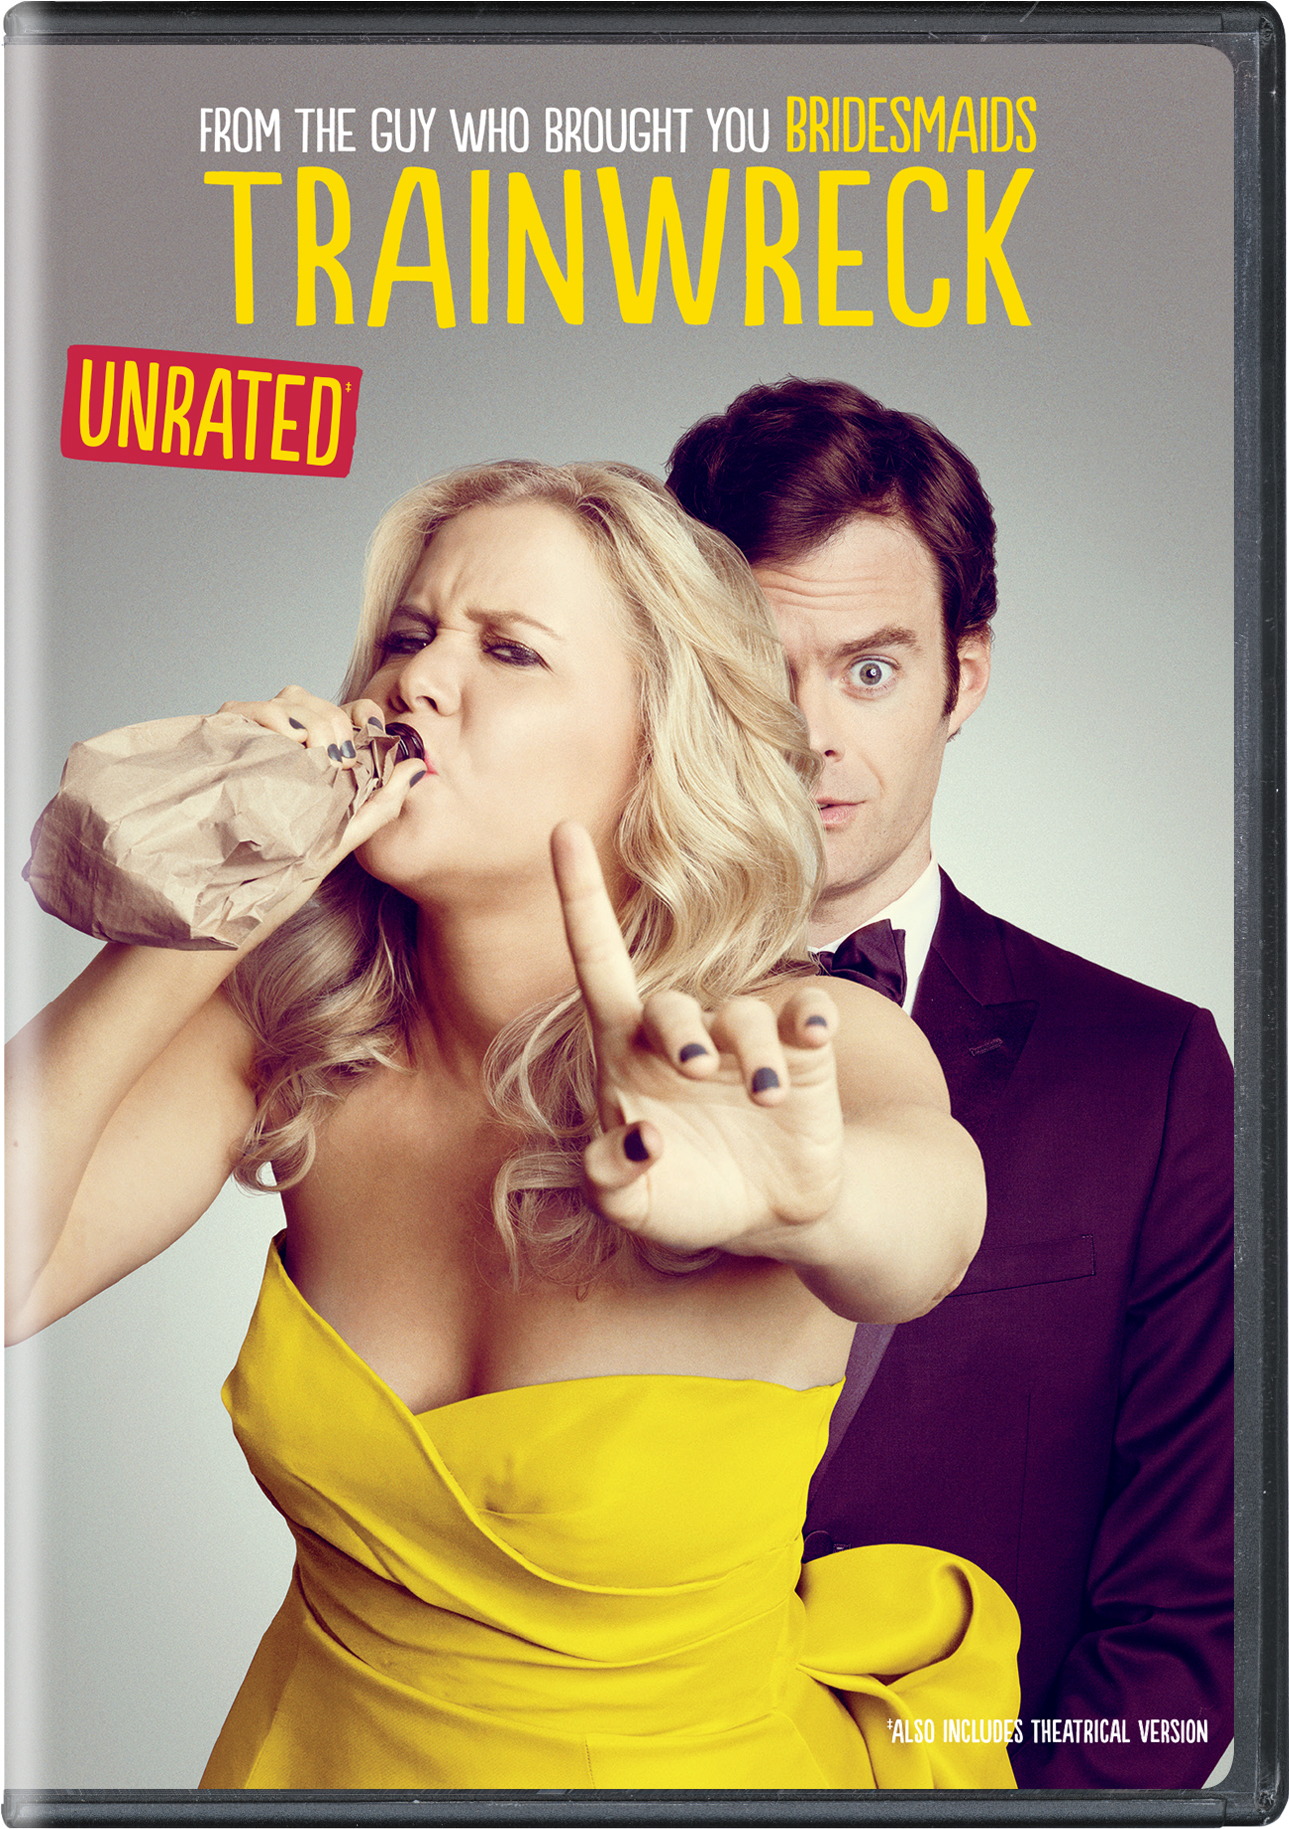 Trainwreck - DVD [ 2015 ]  - Comedy Movies On DVD - Movies On GRUV